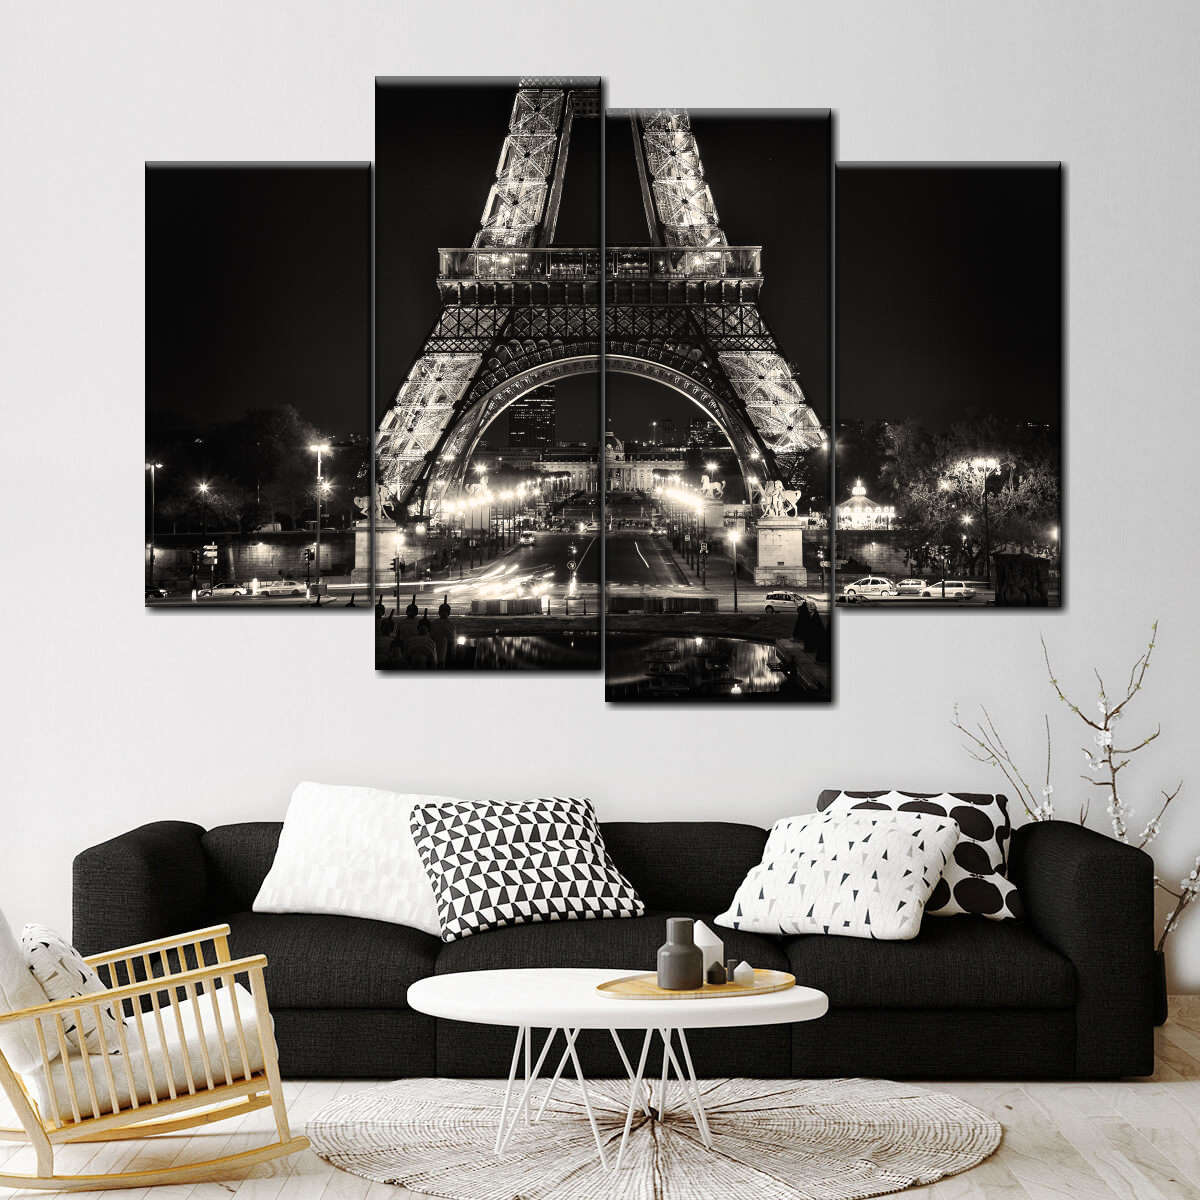 The Eiffel Tower After Dark I Wall Art: Canvas Prints, Art Prints ...